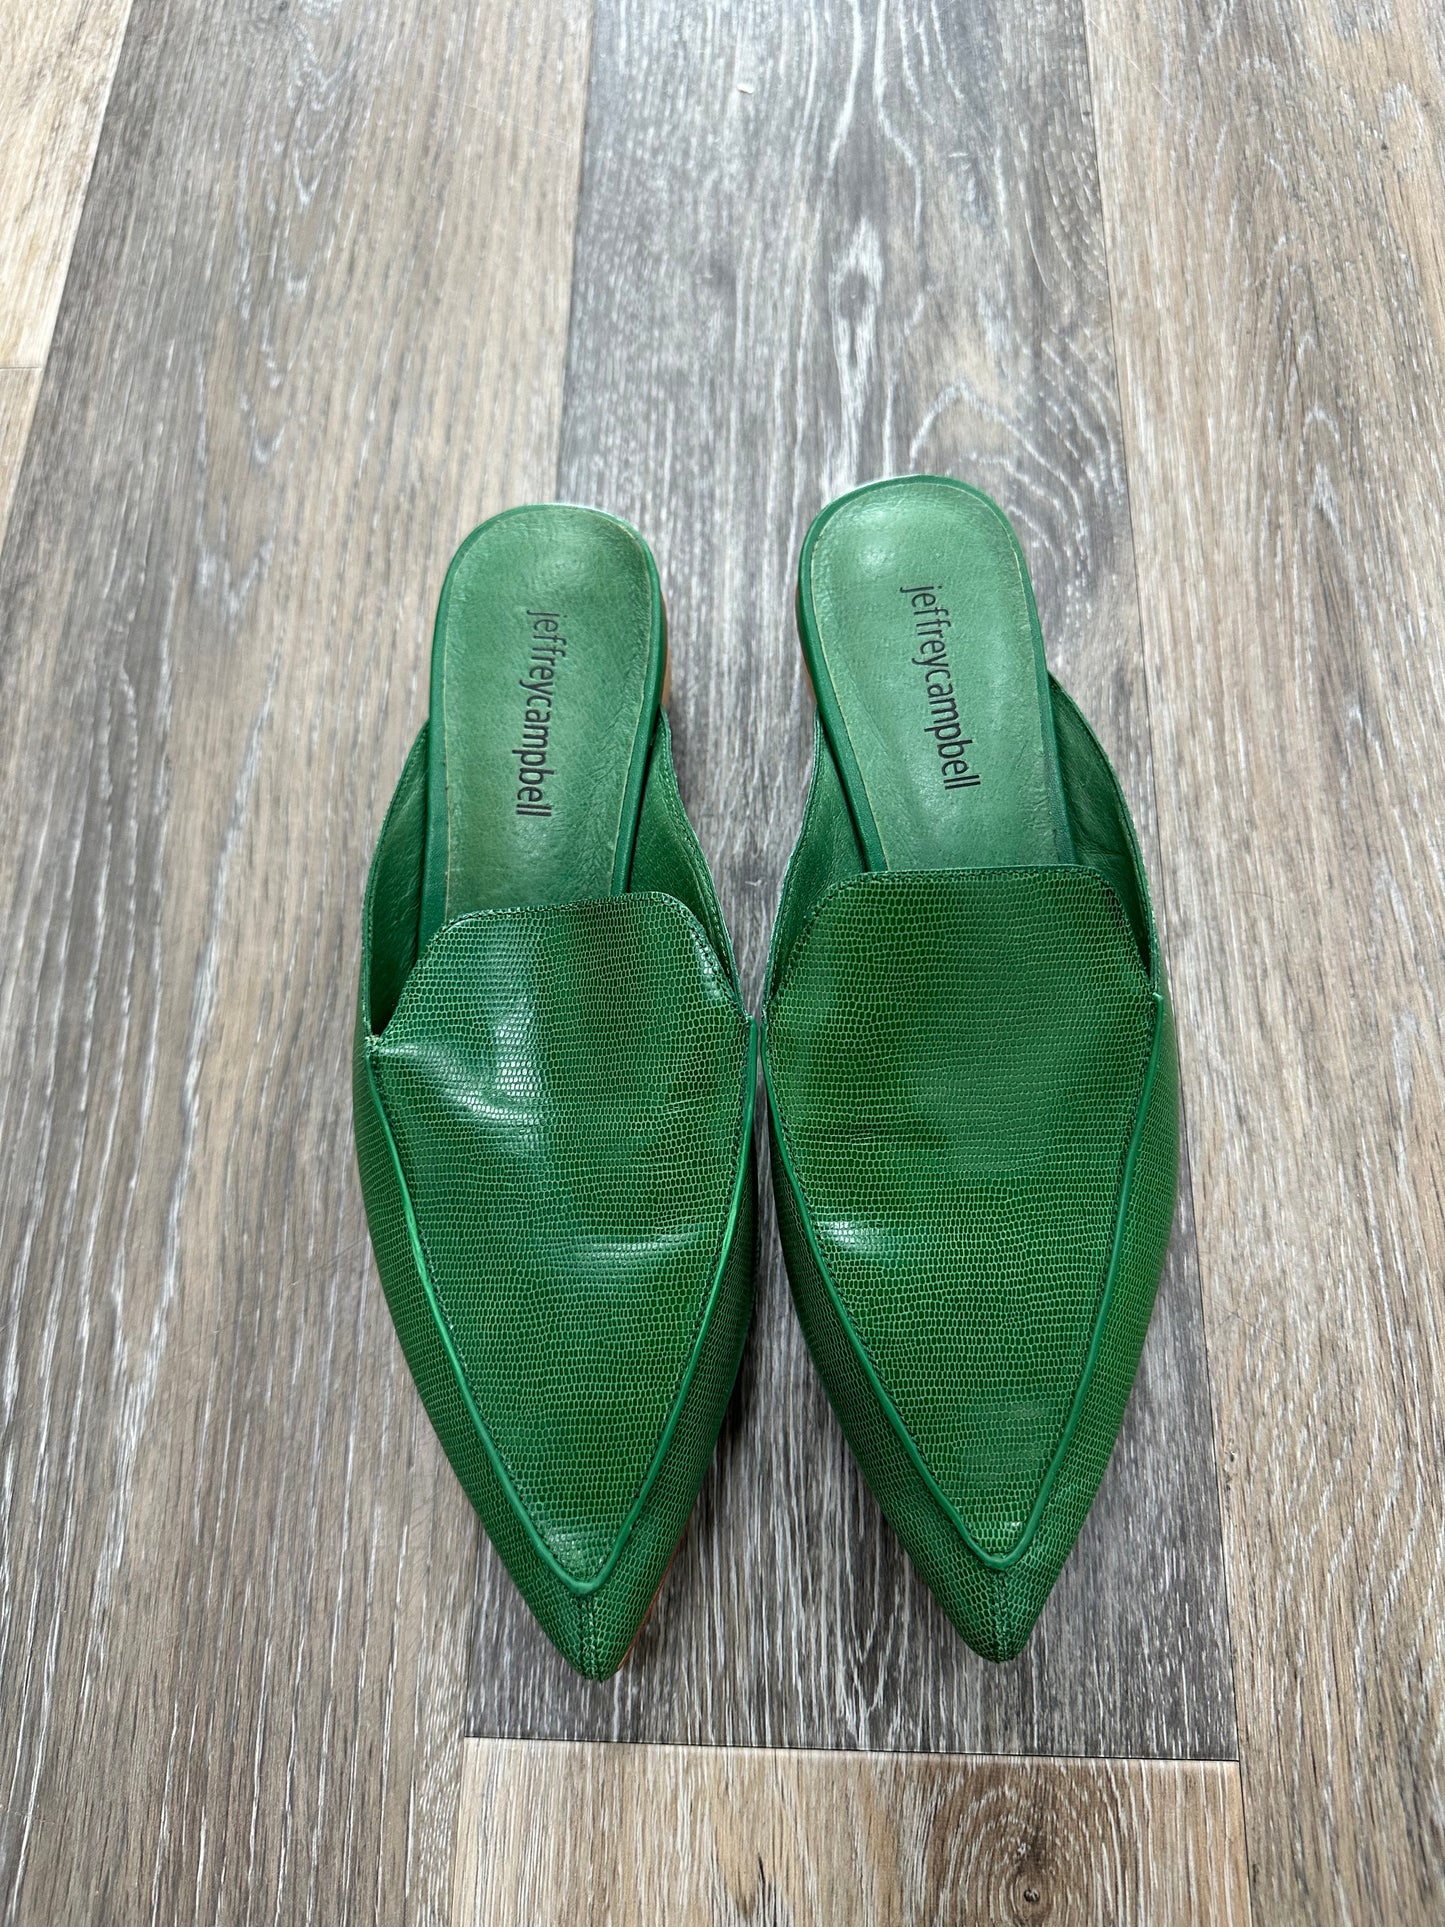 Shoes Flats Mule & Slide By Jeffery Campbell  Size: 6.5